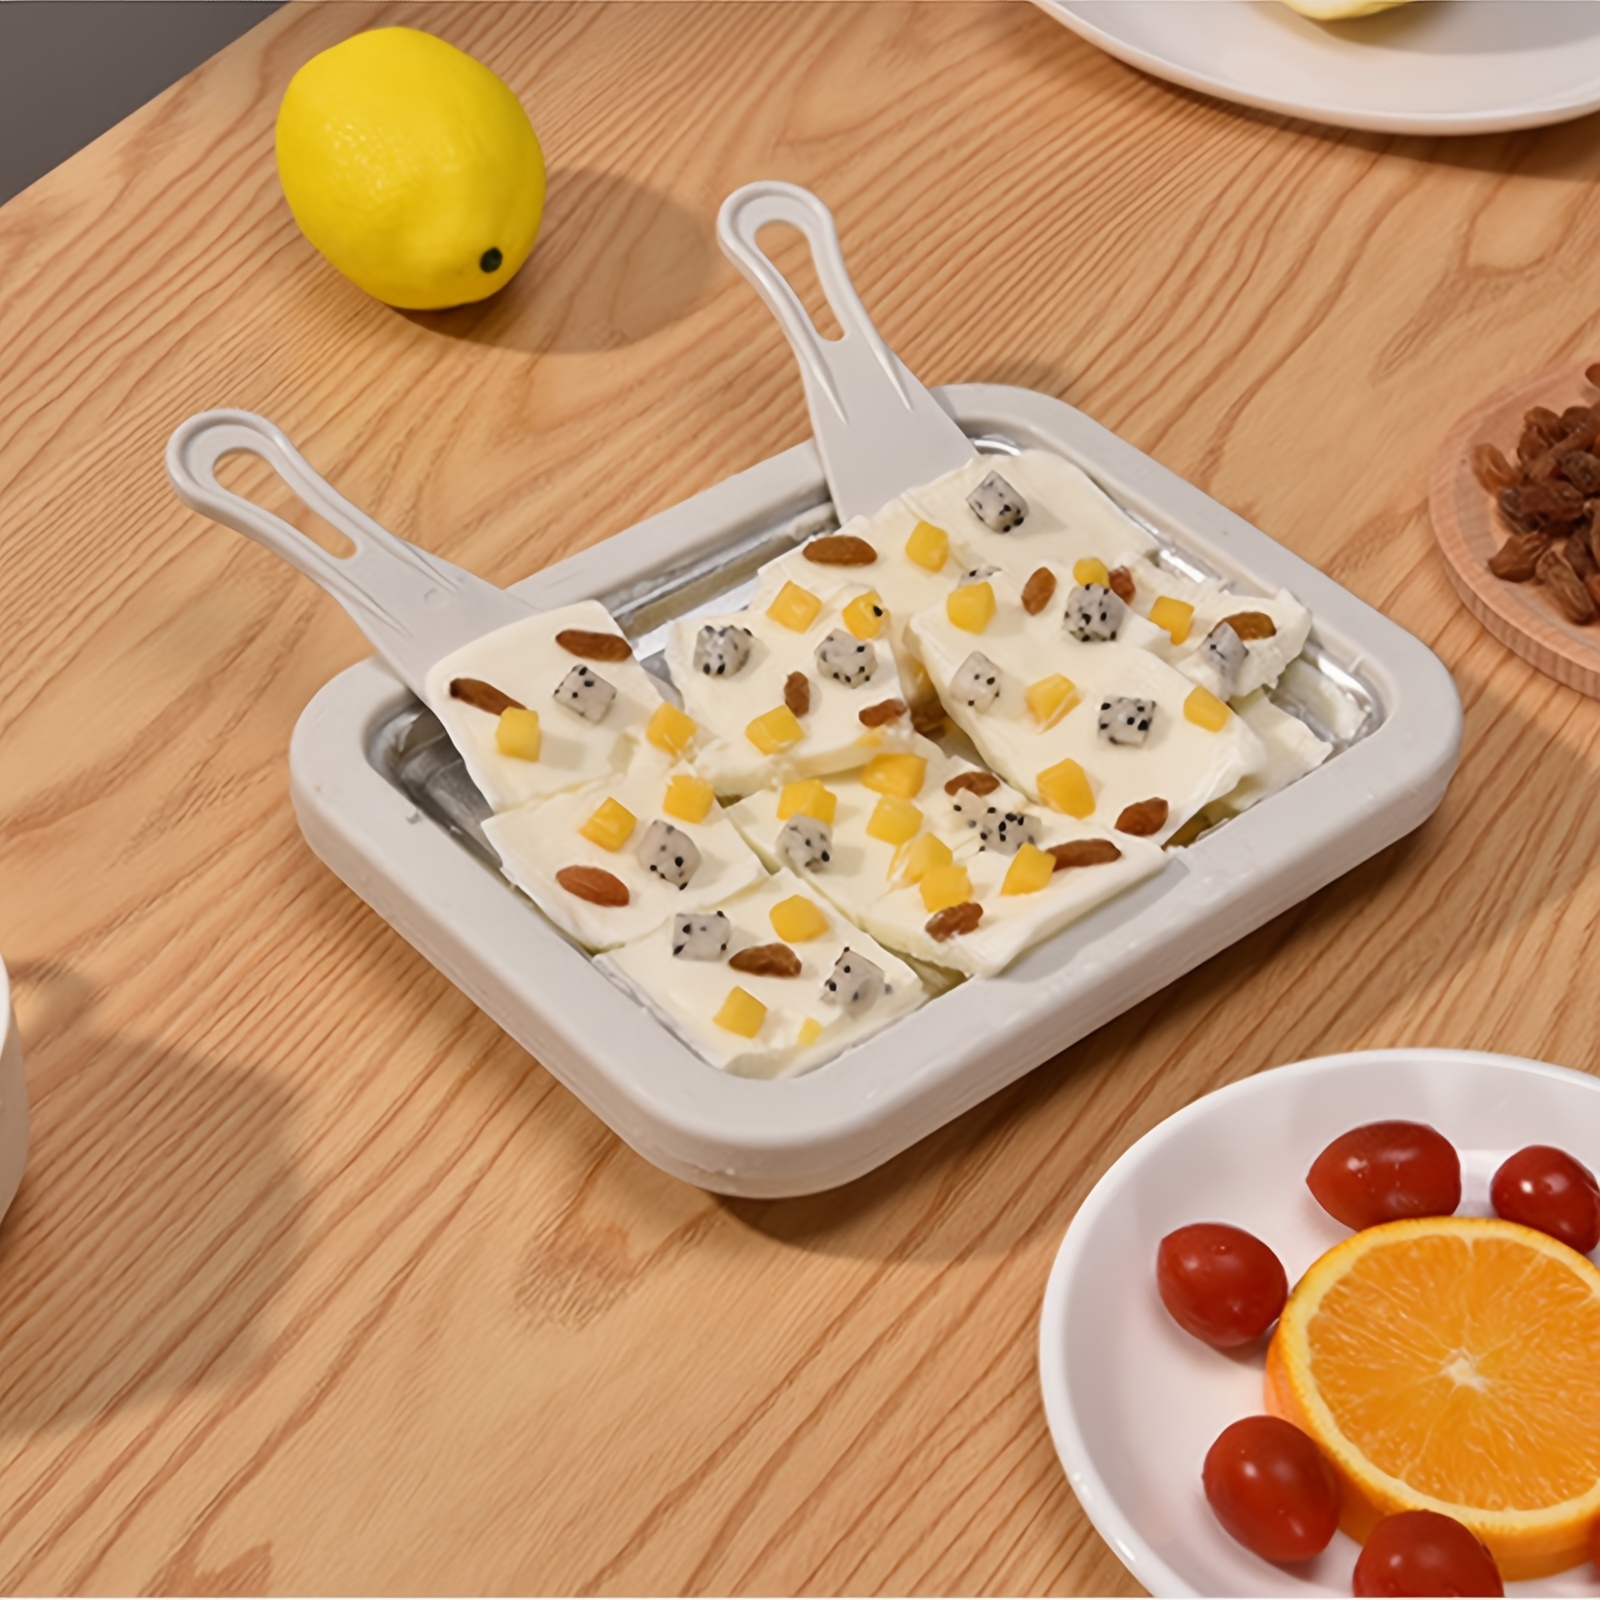 Stainless Steel Yogurt Maker - Create Creamy, Healthy Homemade